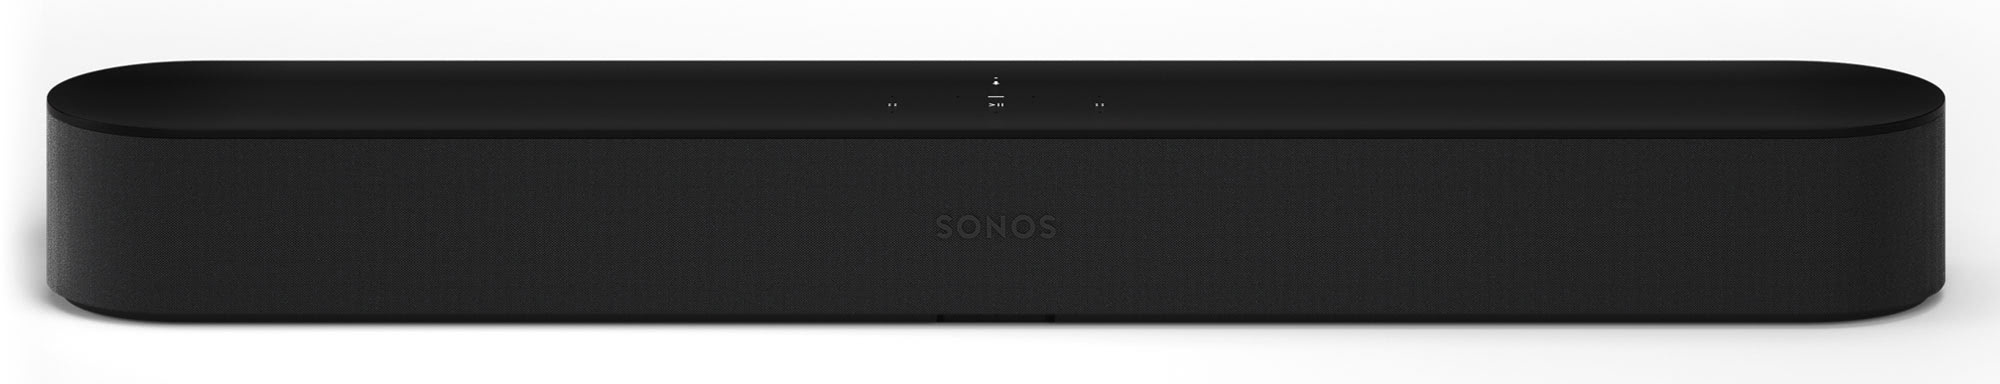 Sonos Beam (Gen 2) black